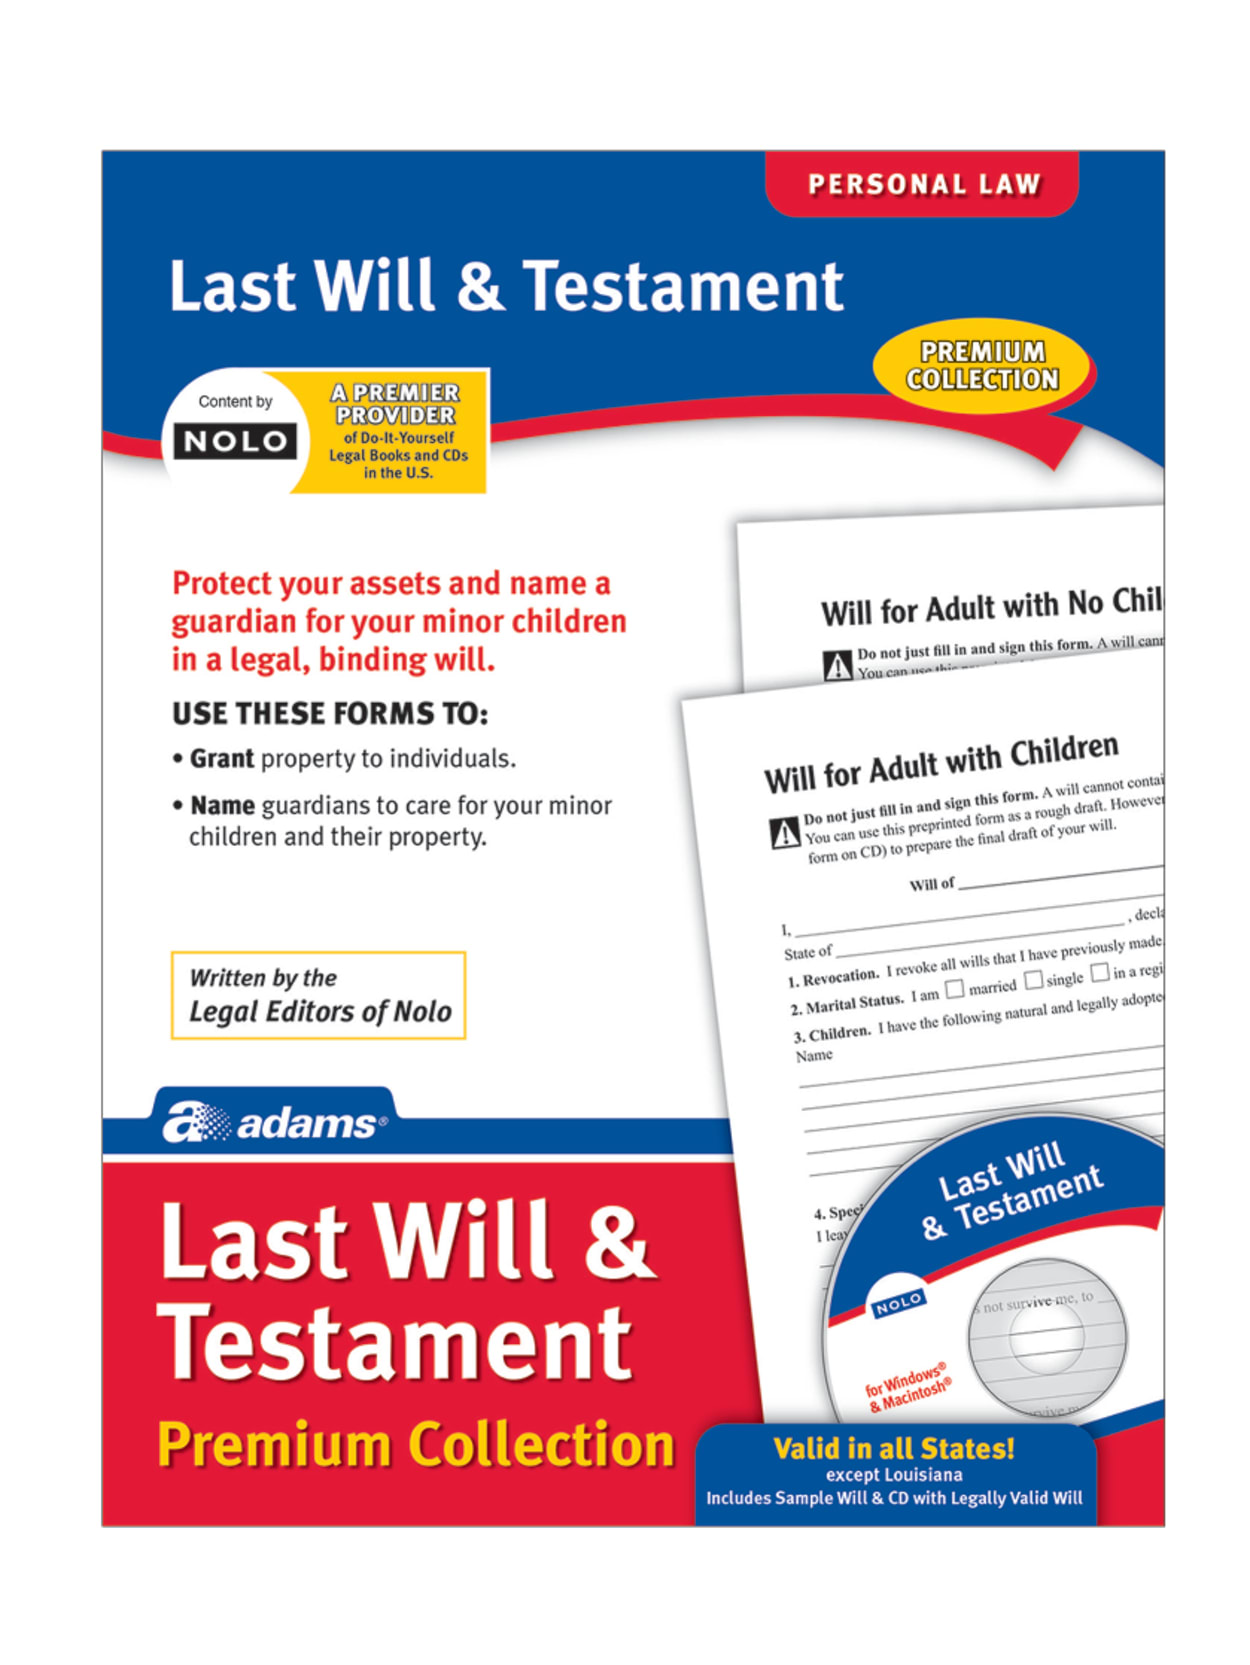 Adams Last Will And Testament Office Depot